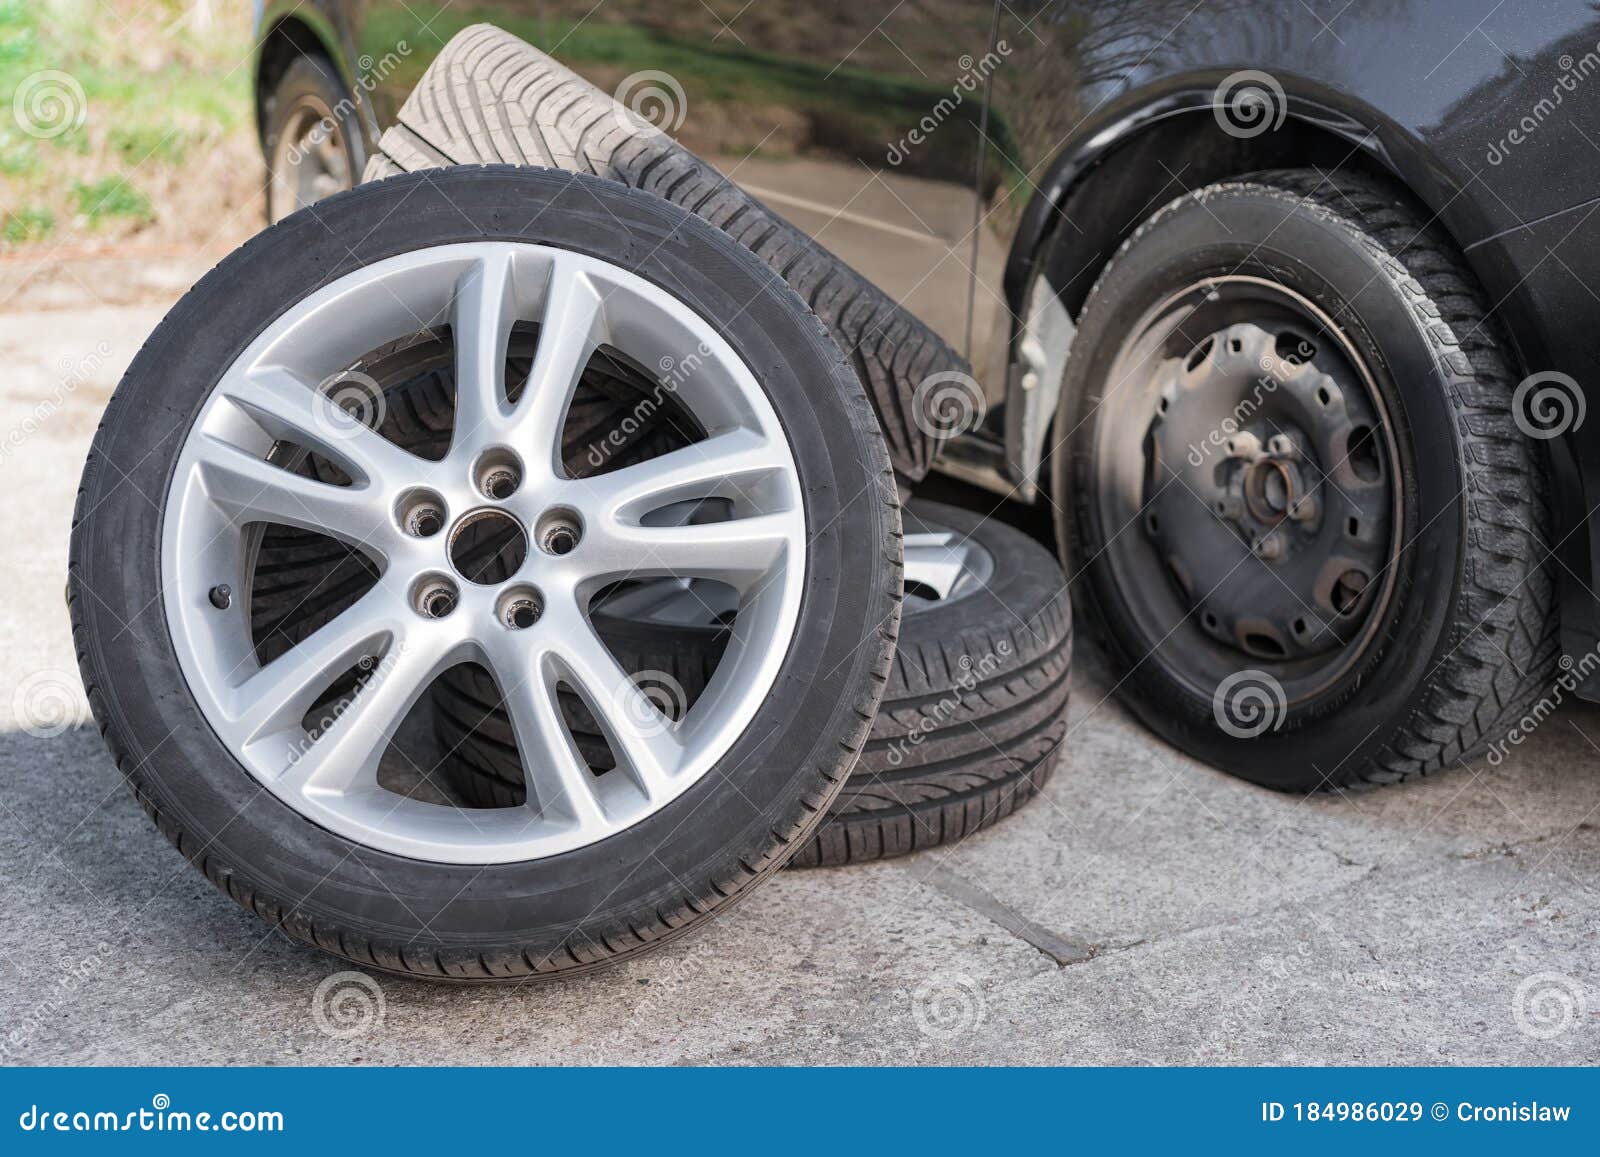 Summer Wheels Lying Near Car On Winter Tires Stock Image ...